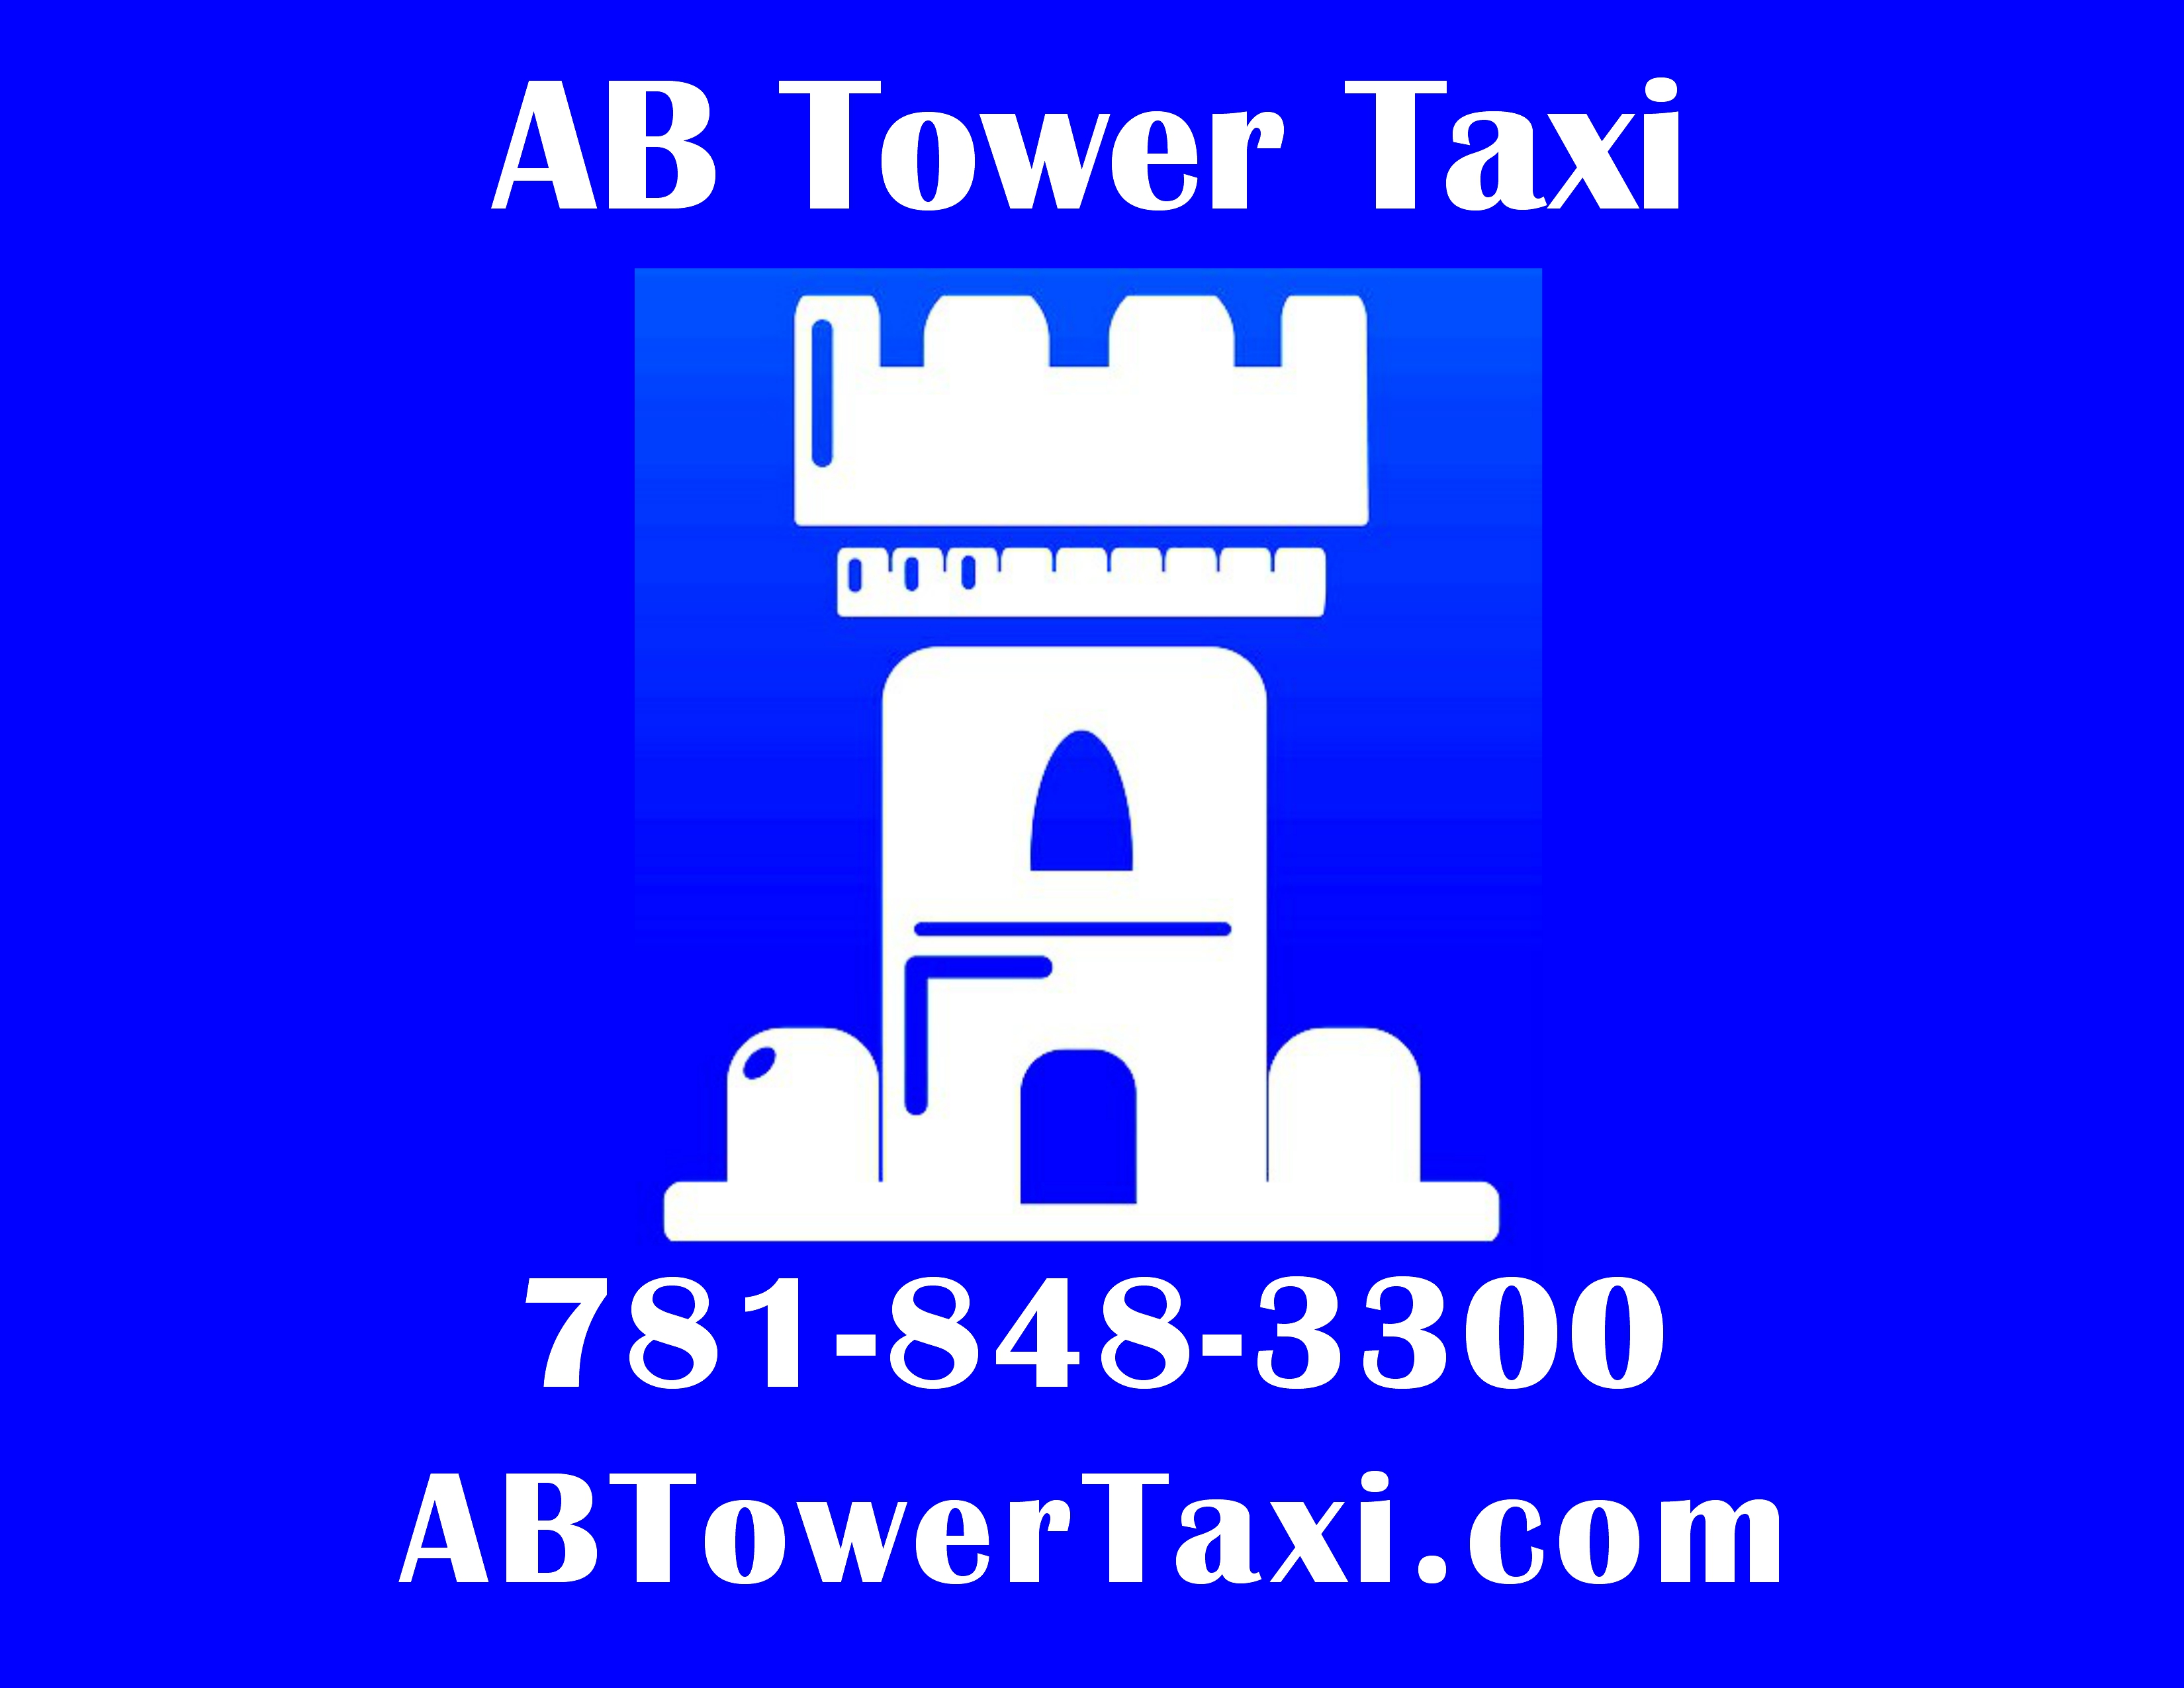 AB Tower Taxi Cab Logo 781-848-3300 or bookonline abtowertaxi.com